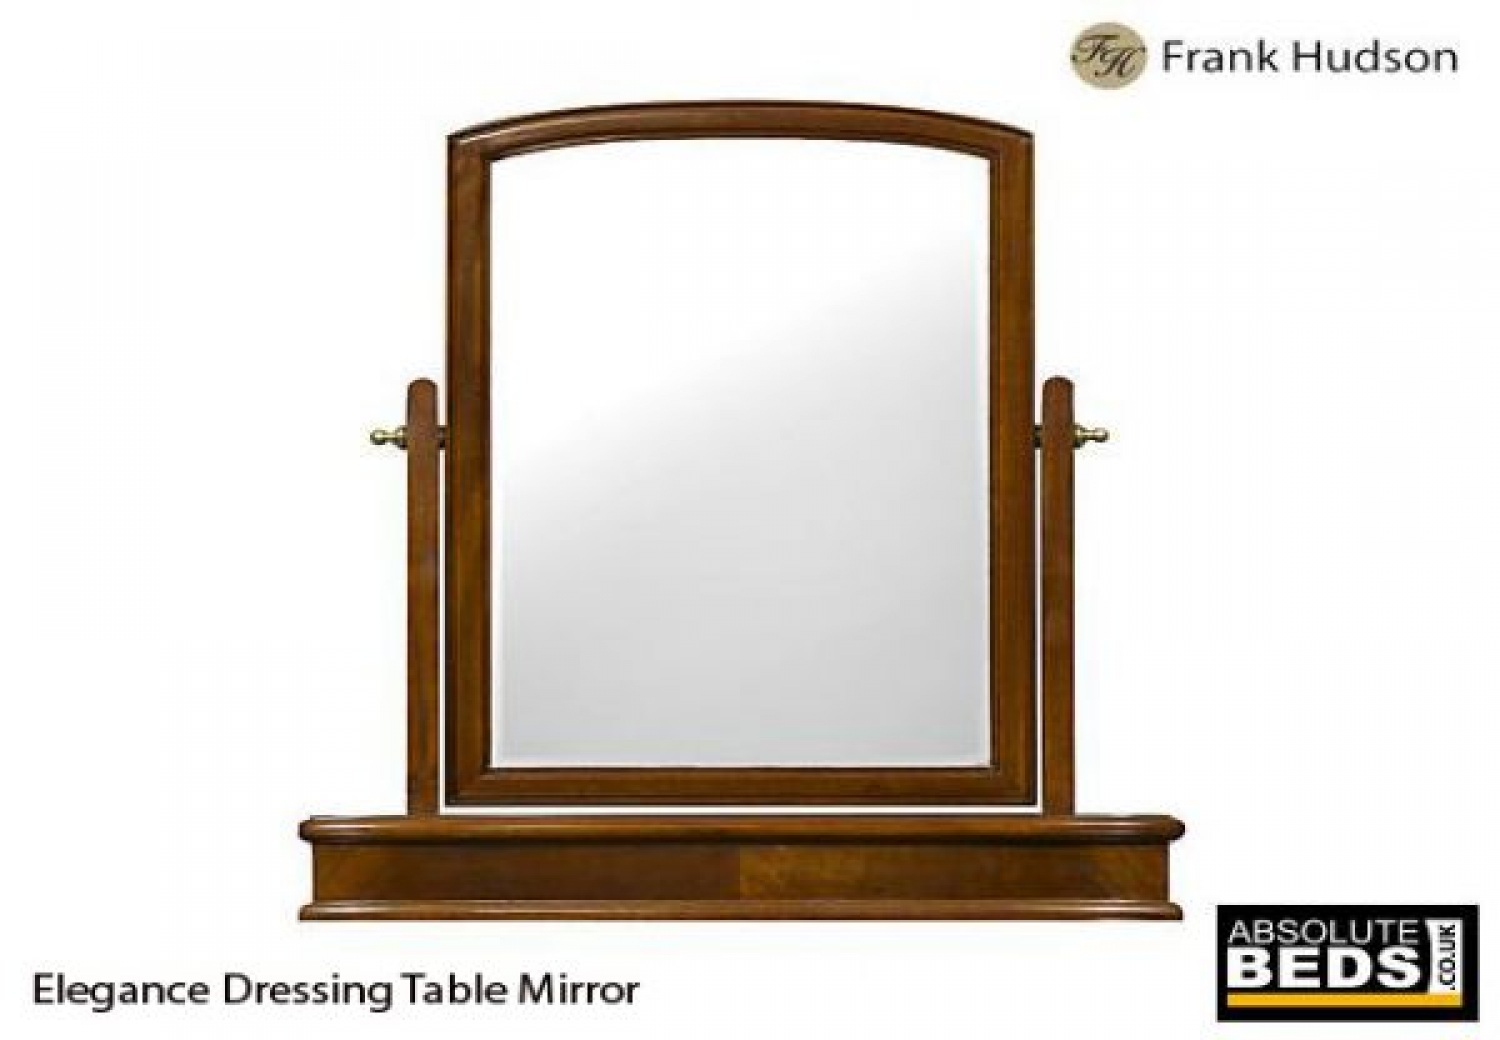 frank hudson elegance mahogany dressing table mirror image